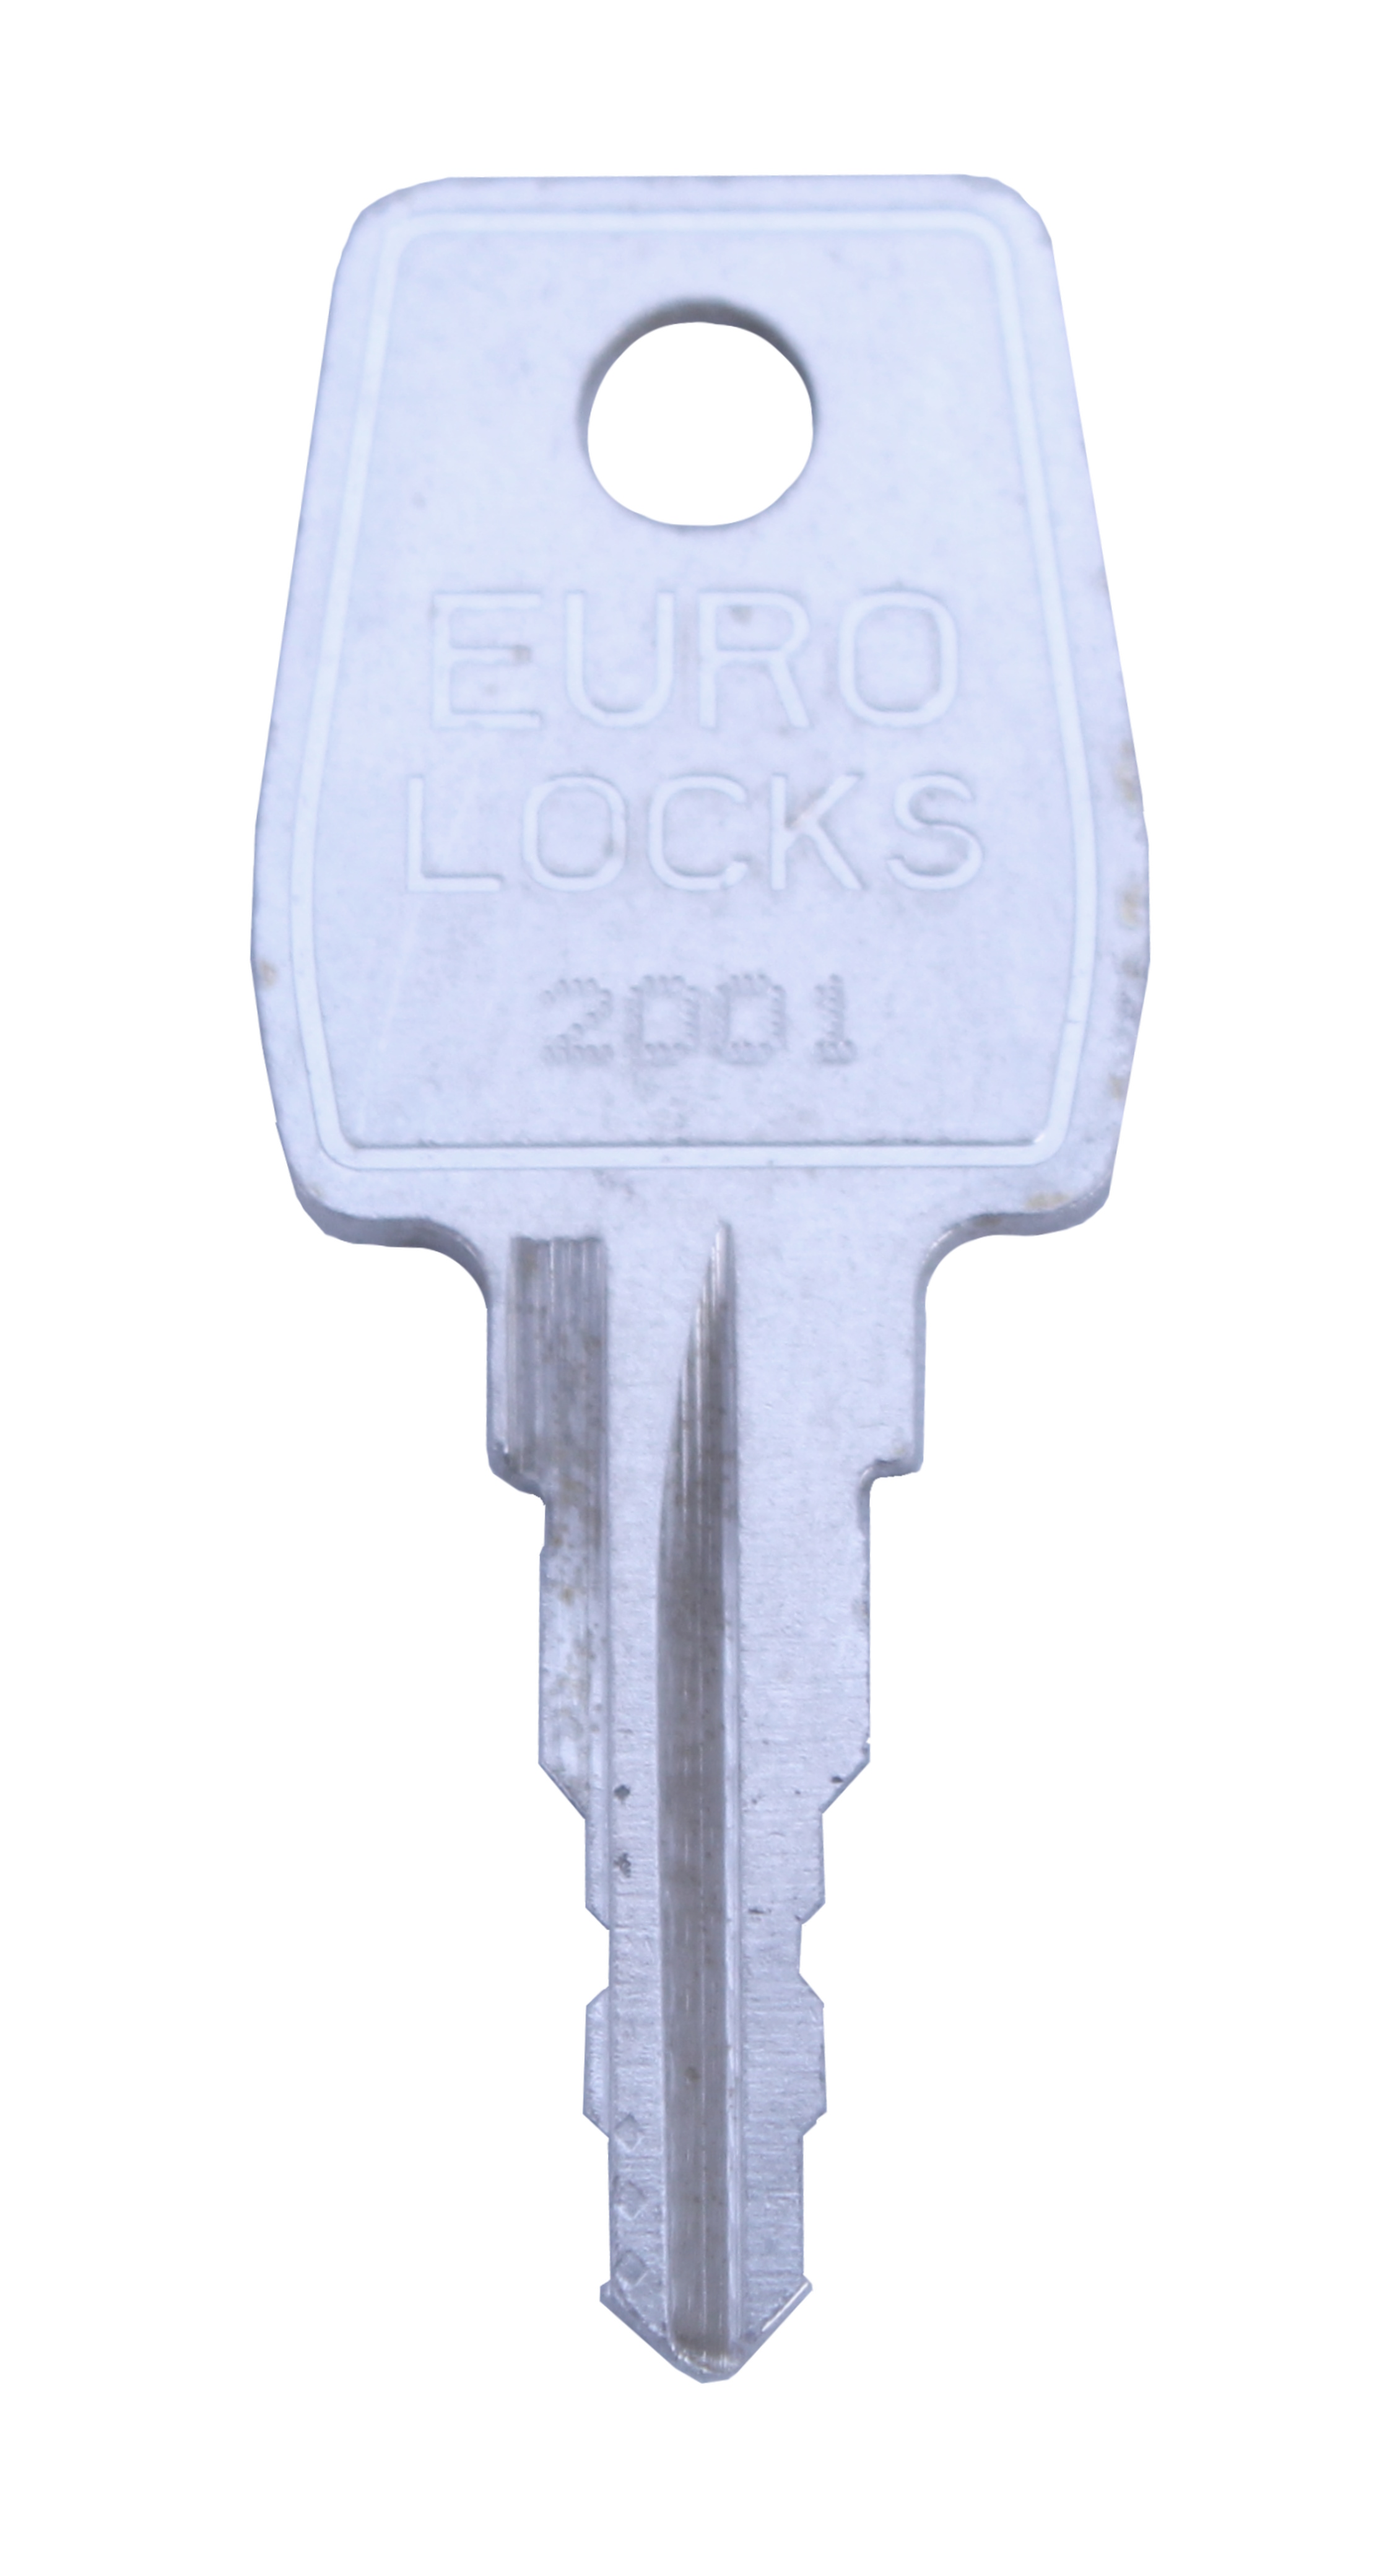 EUROLOCKS Key 2001